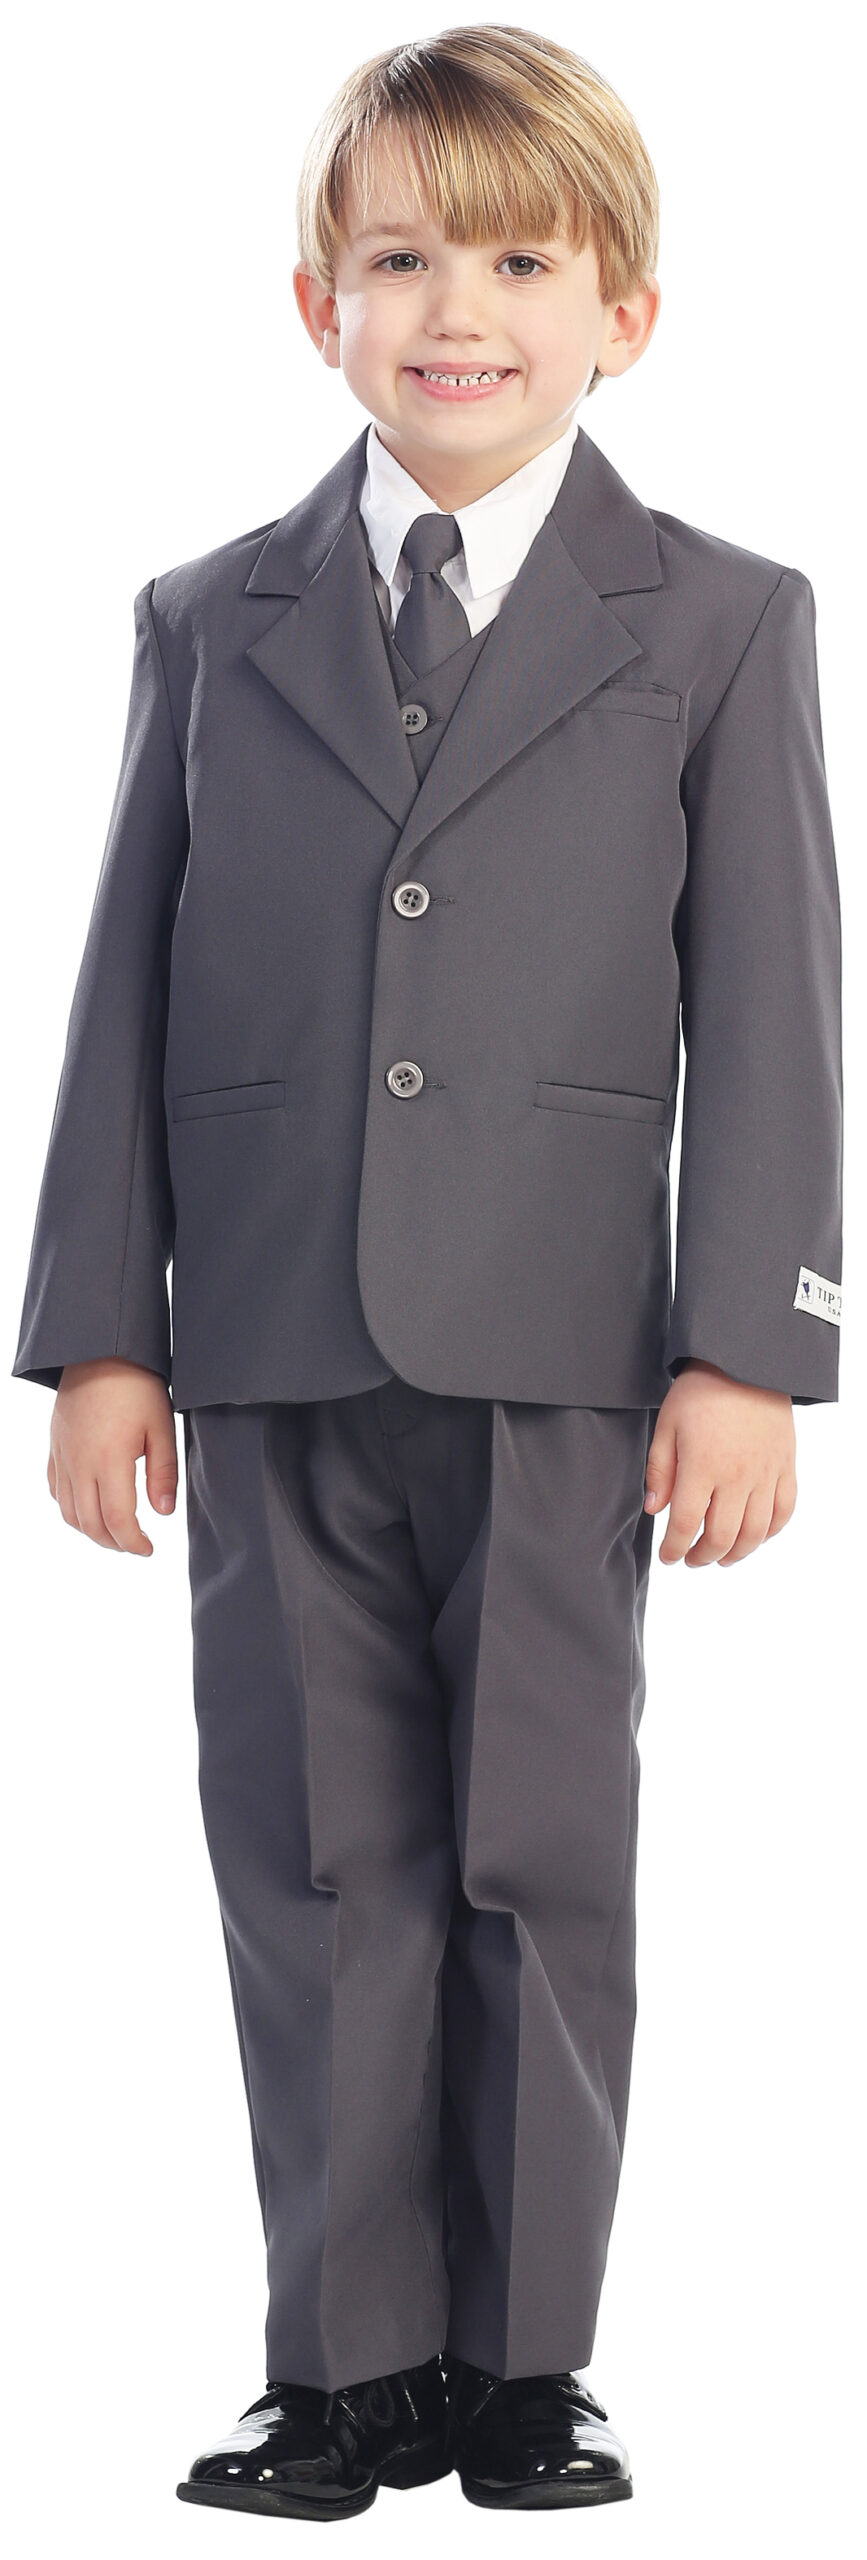 Avery Hill 5-Piece Boy's 2-Button Dress Suit Full-Back Vest - Charcoal Grey Size 2